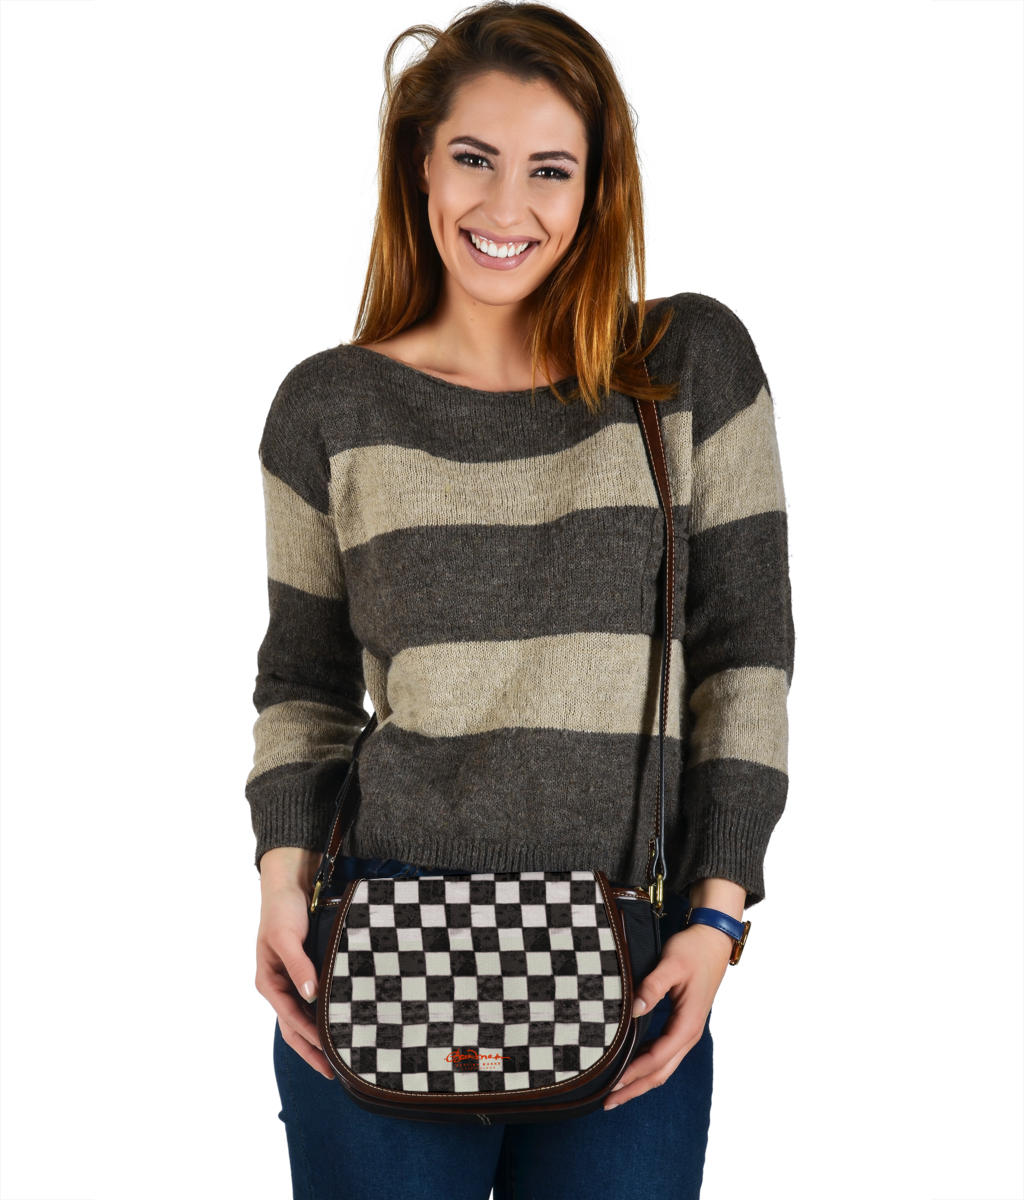 B&W Checkerboard Saddle Shoulder Bag